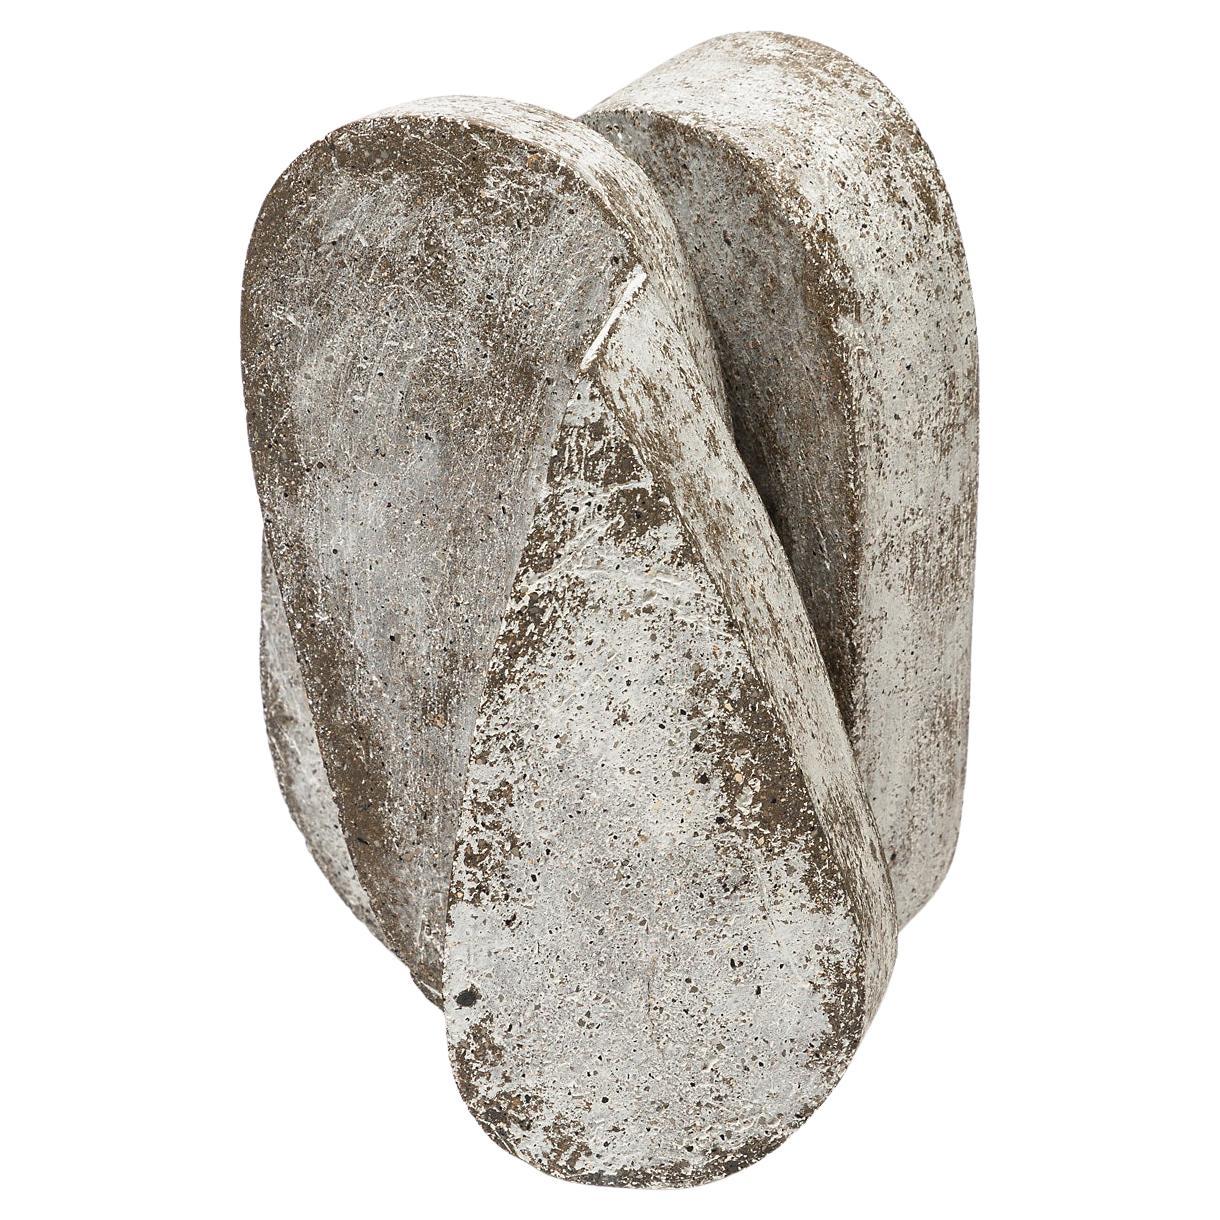 Stoneware Sculpture by Maarten Stuer, Entitled "Bloc in Motion", 2020